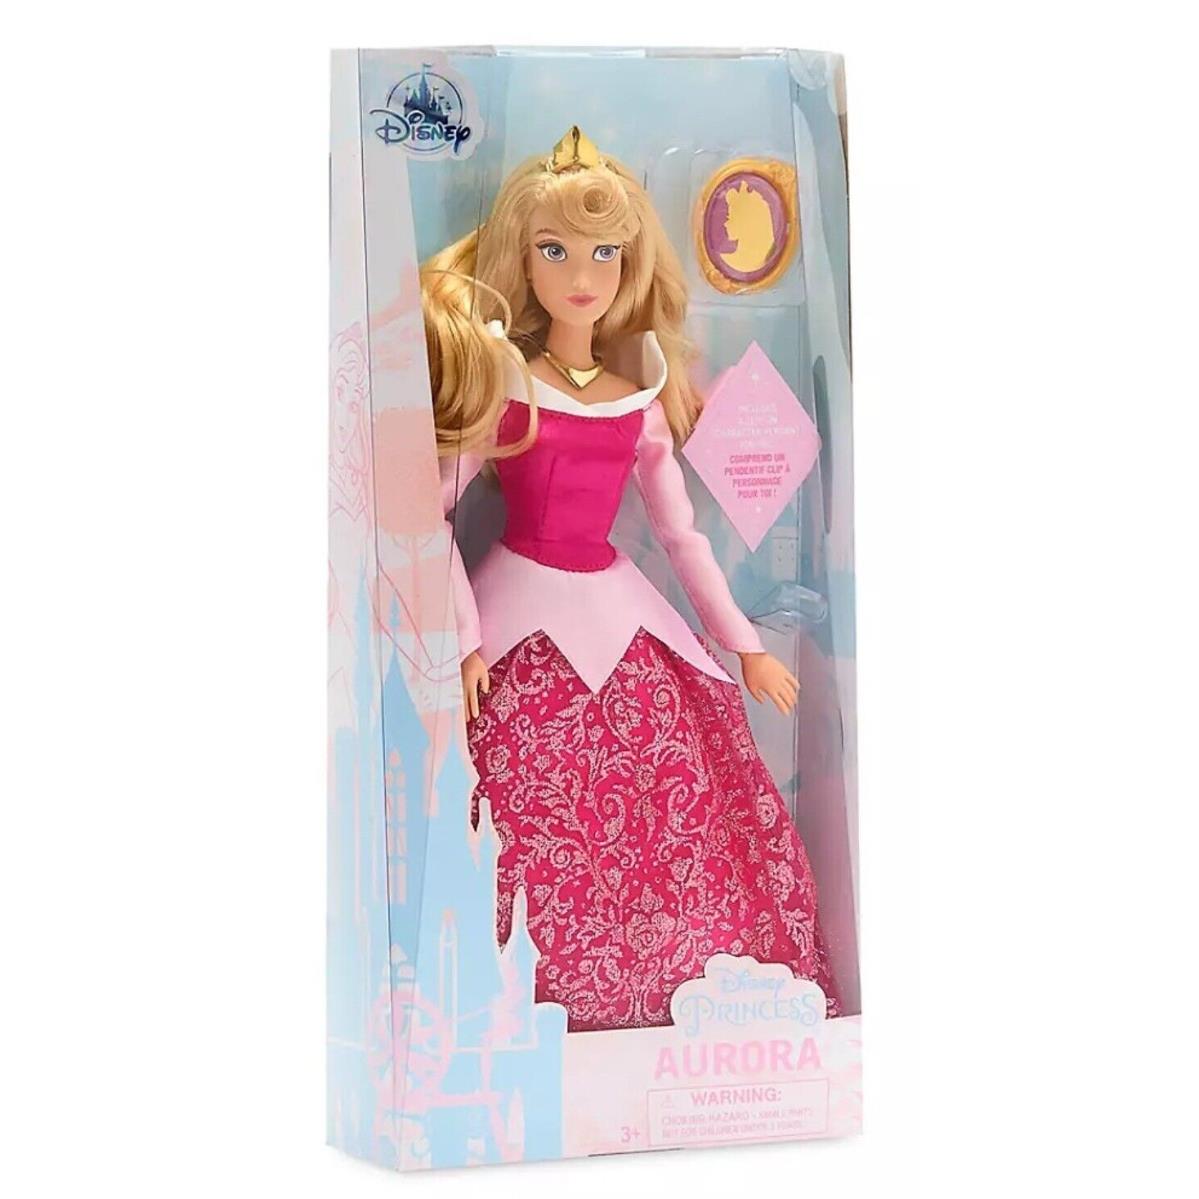 Disney Store Princess Aurora Classic Doll Accessory Pack Set Sleeping Beauty